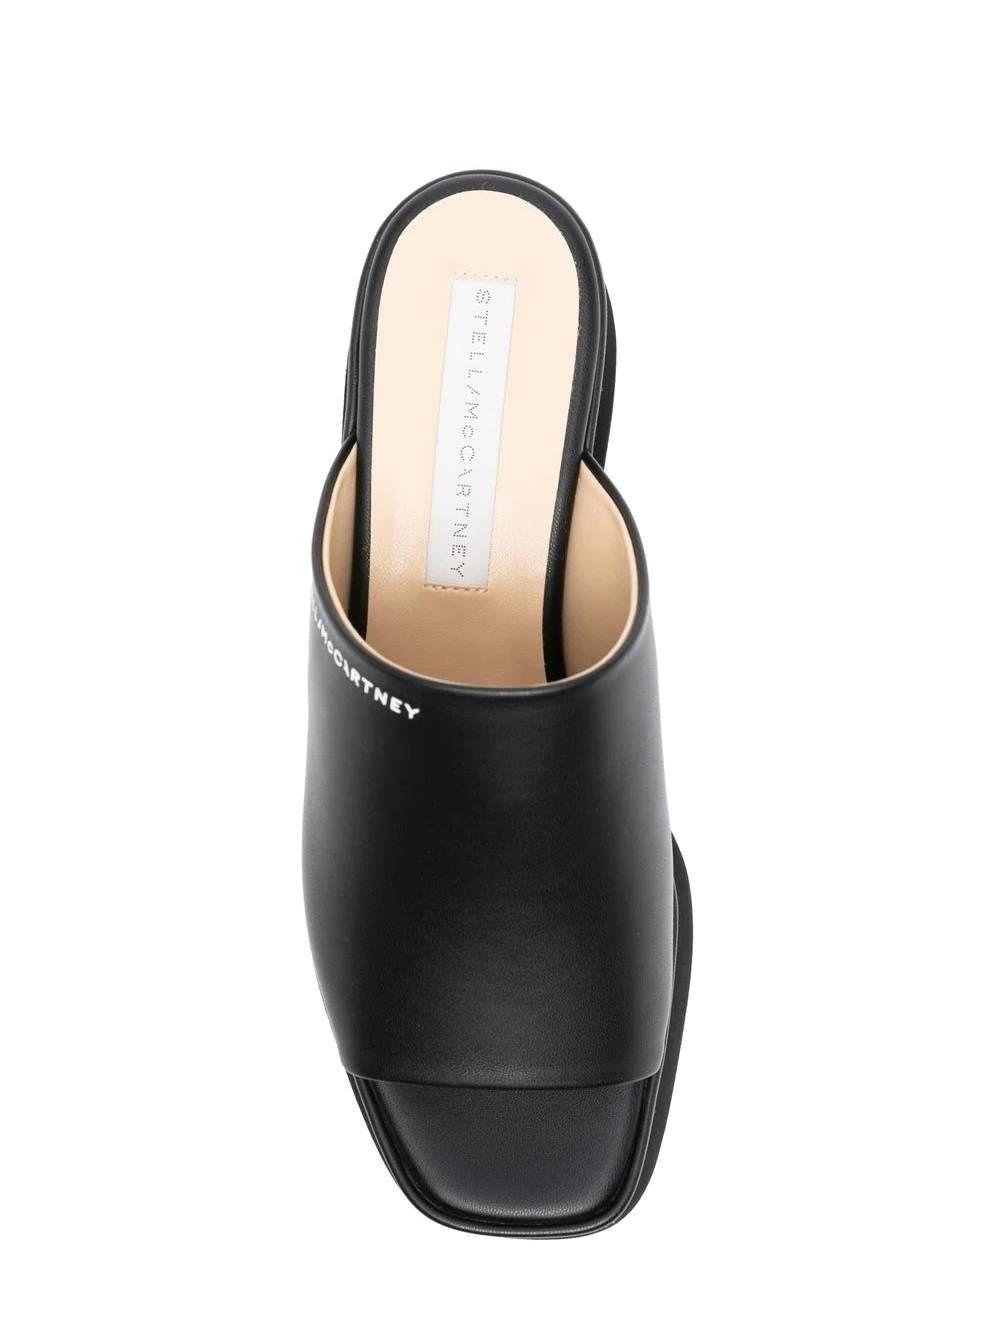 Slip-on sandals with platform sole